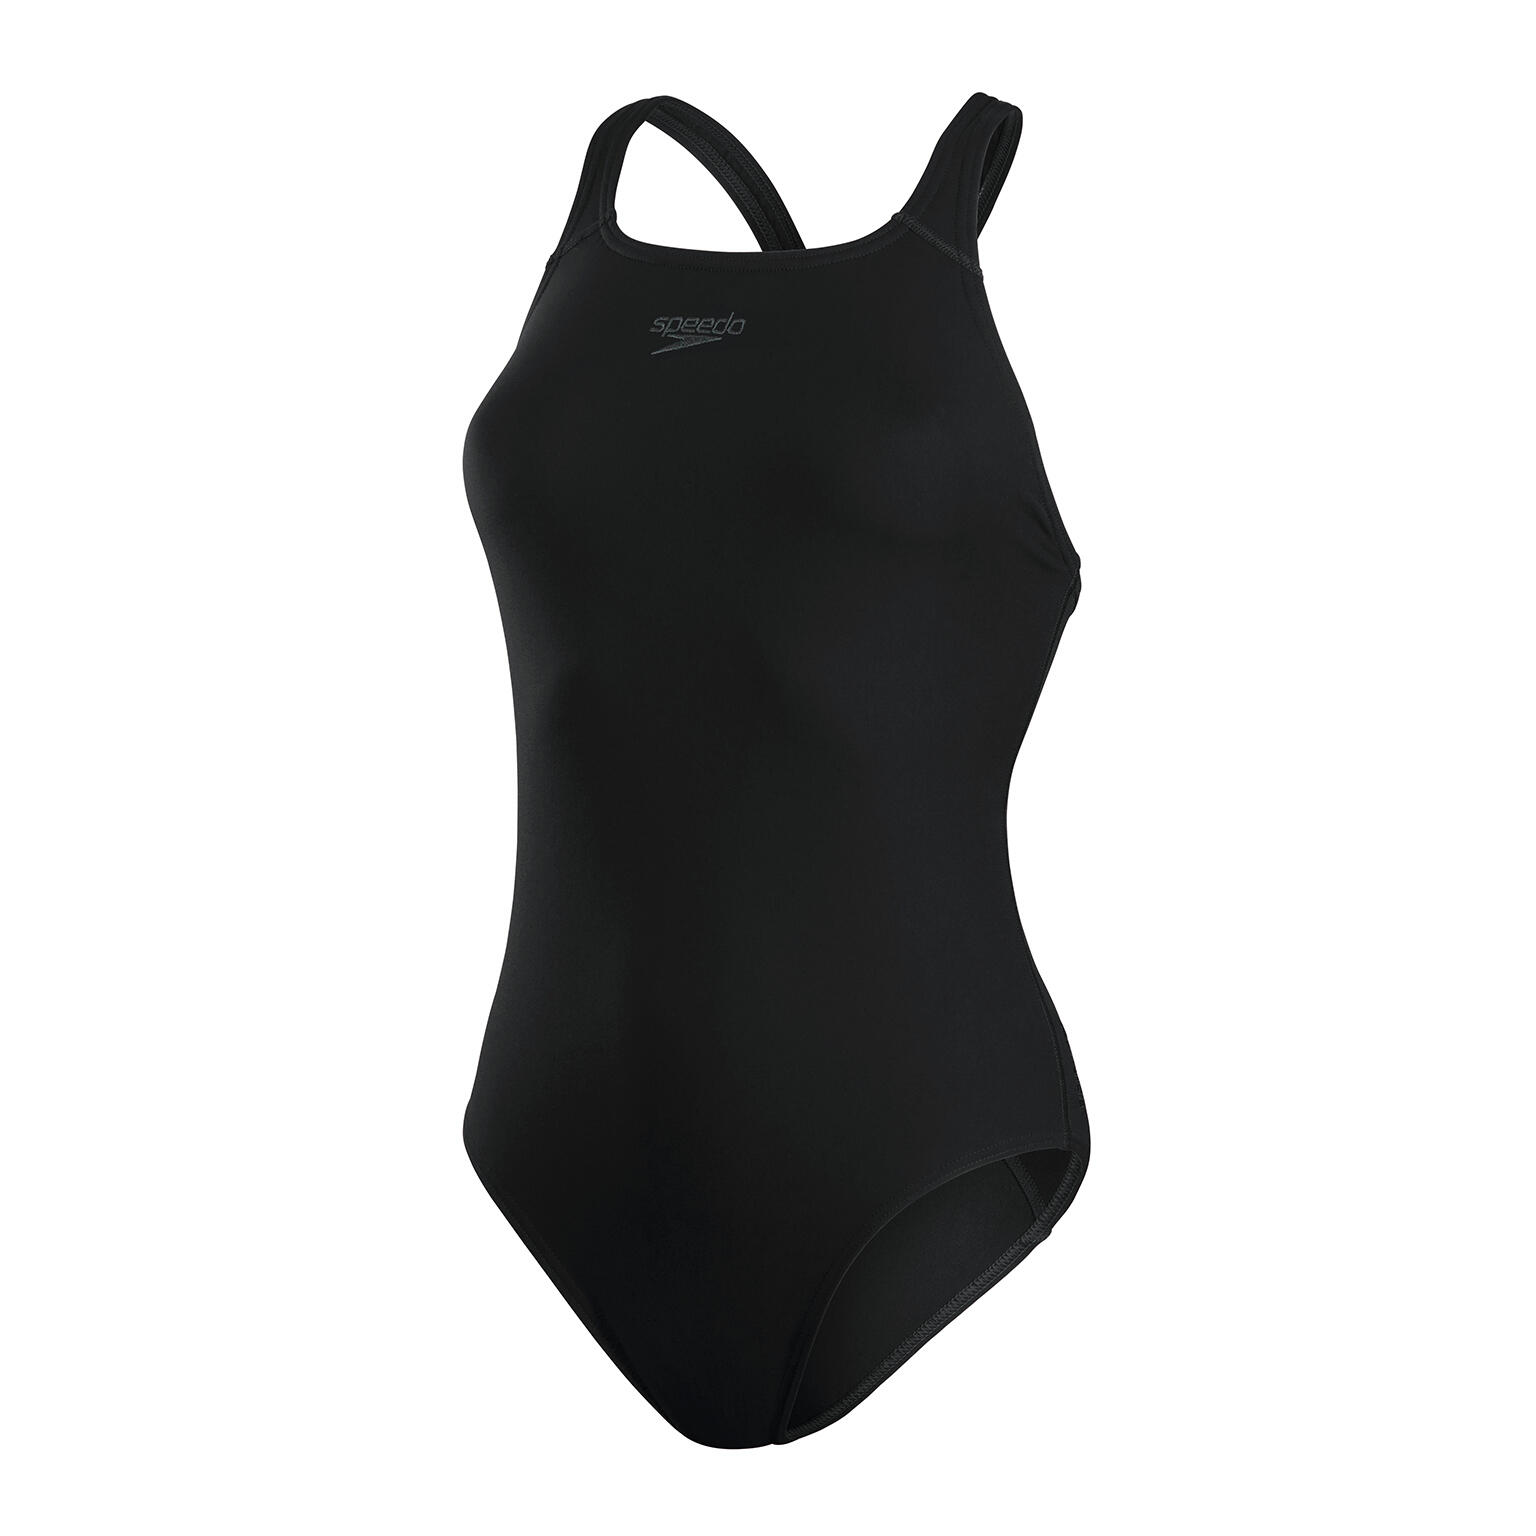 SPEEDO Speedo Women's Eco Endurance+ Medalist Swimsuit - Black